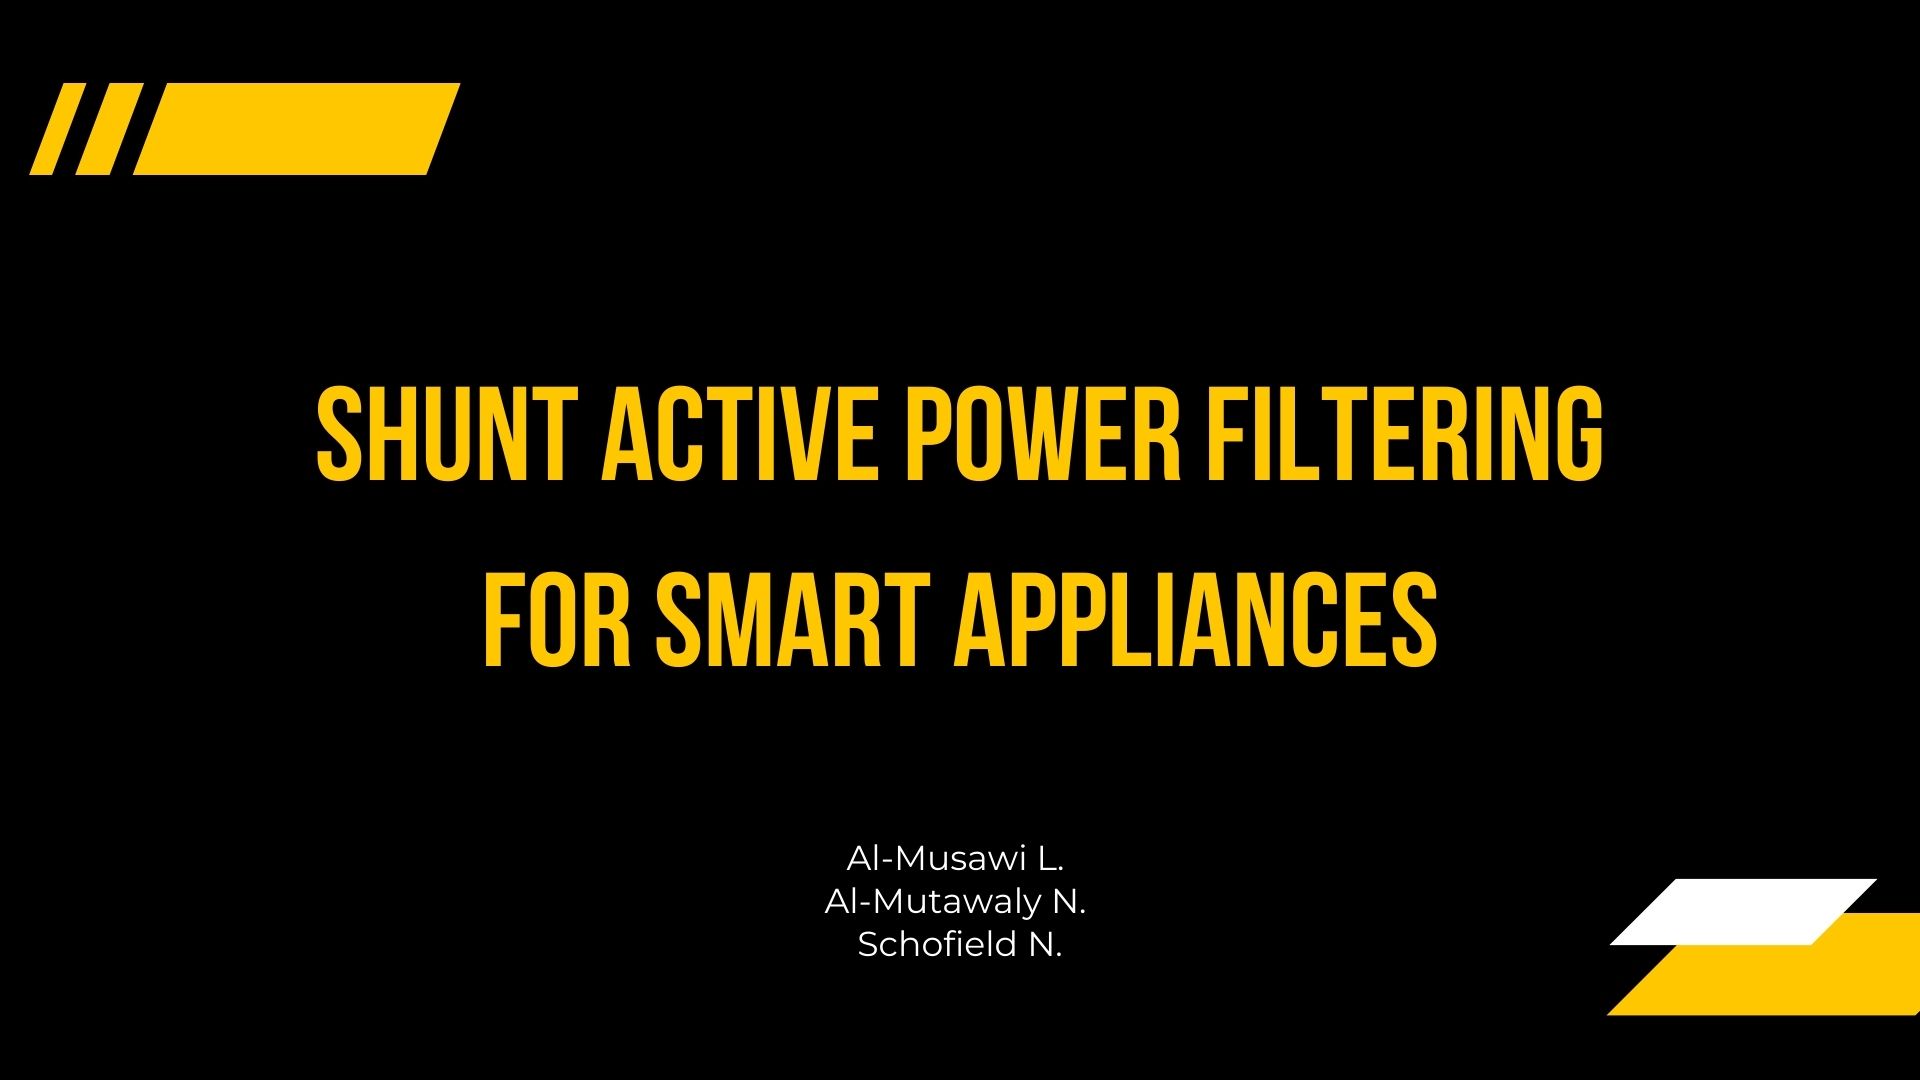 Shunt active power filtering for smart appliances